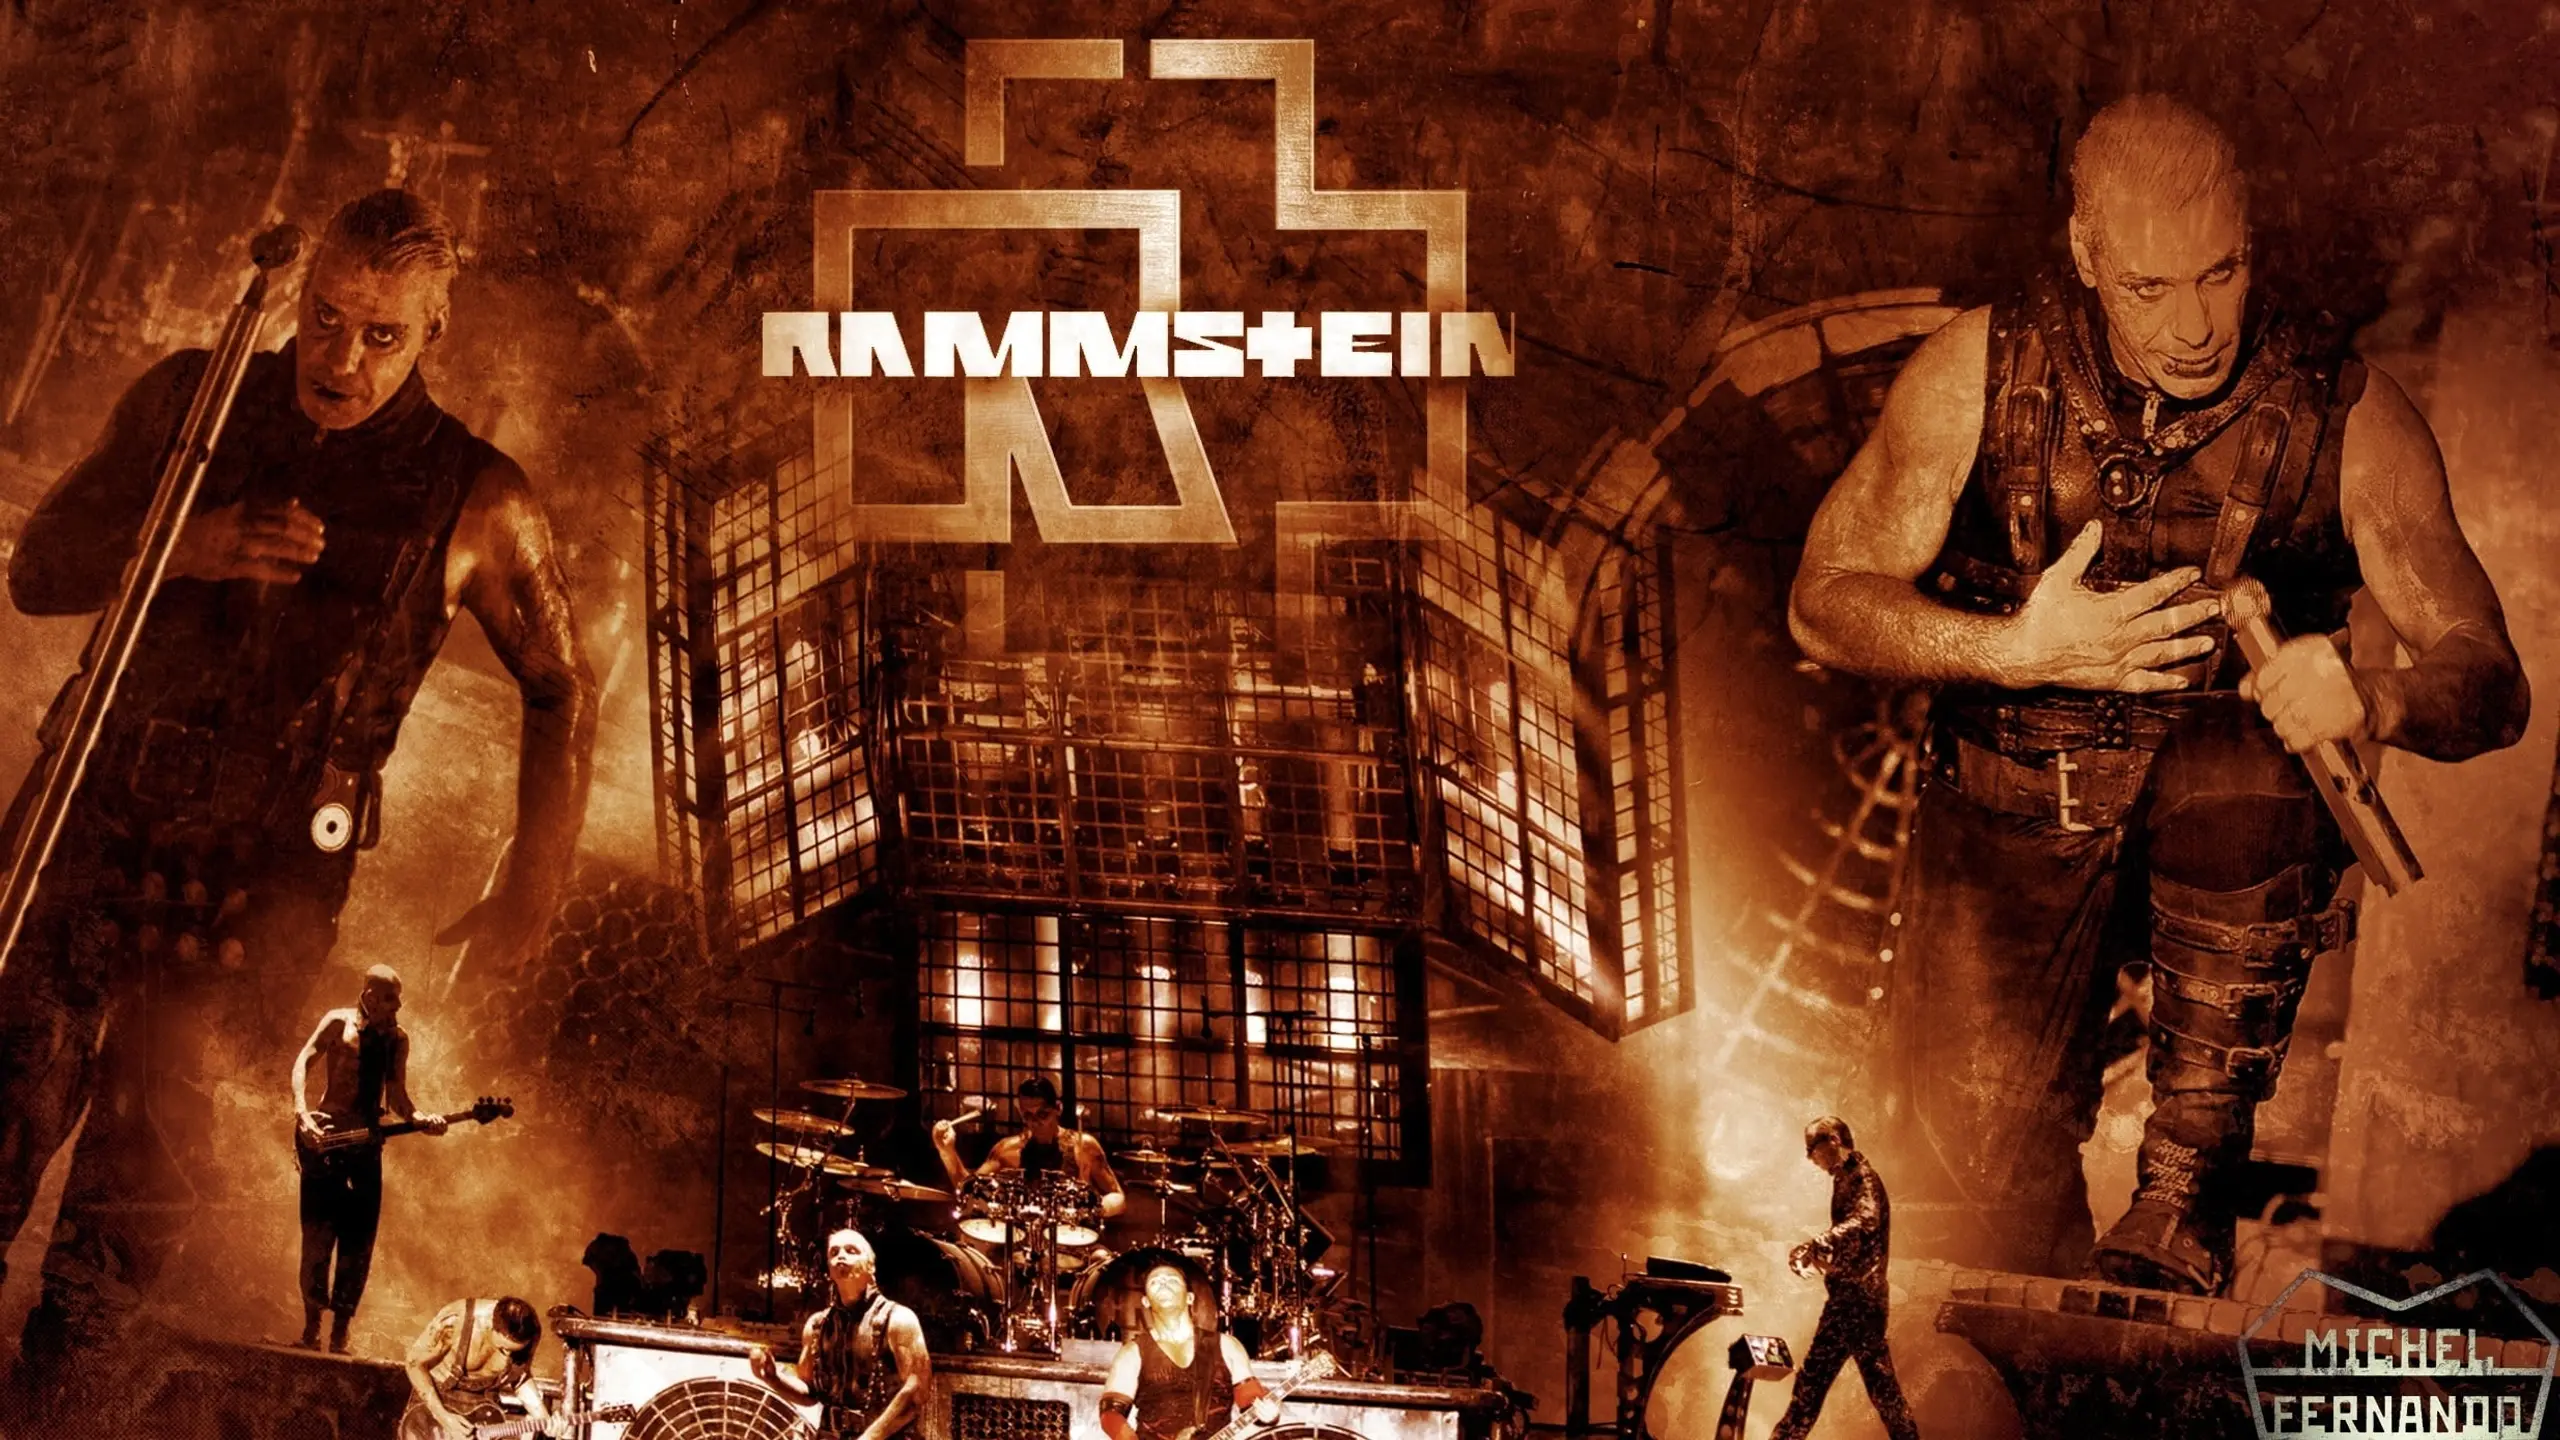 Rammstein - Völkerball Live